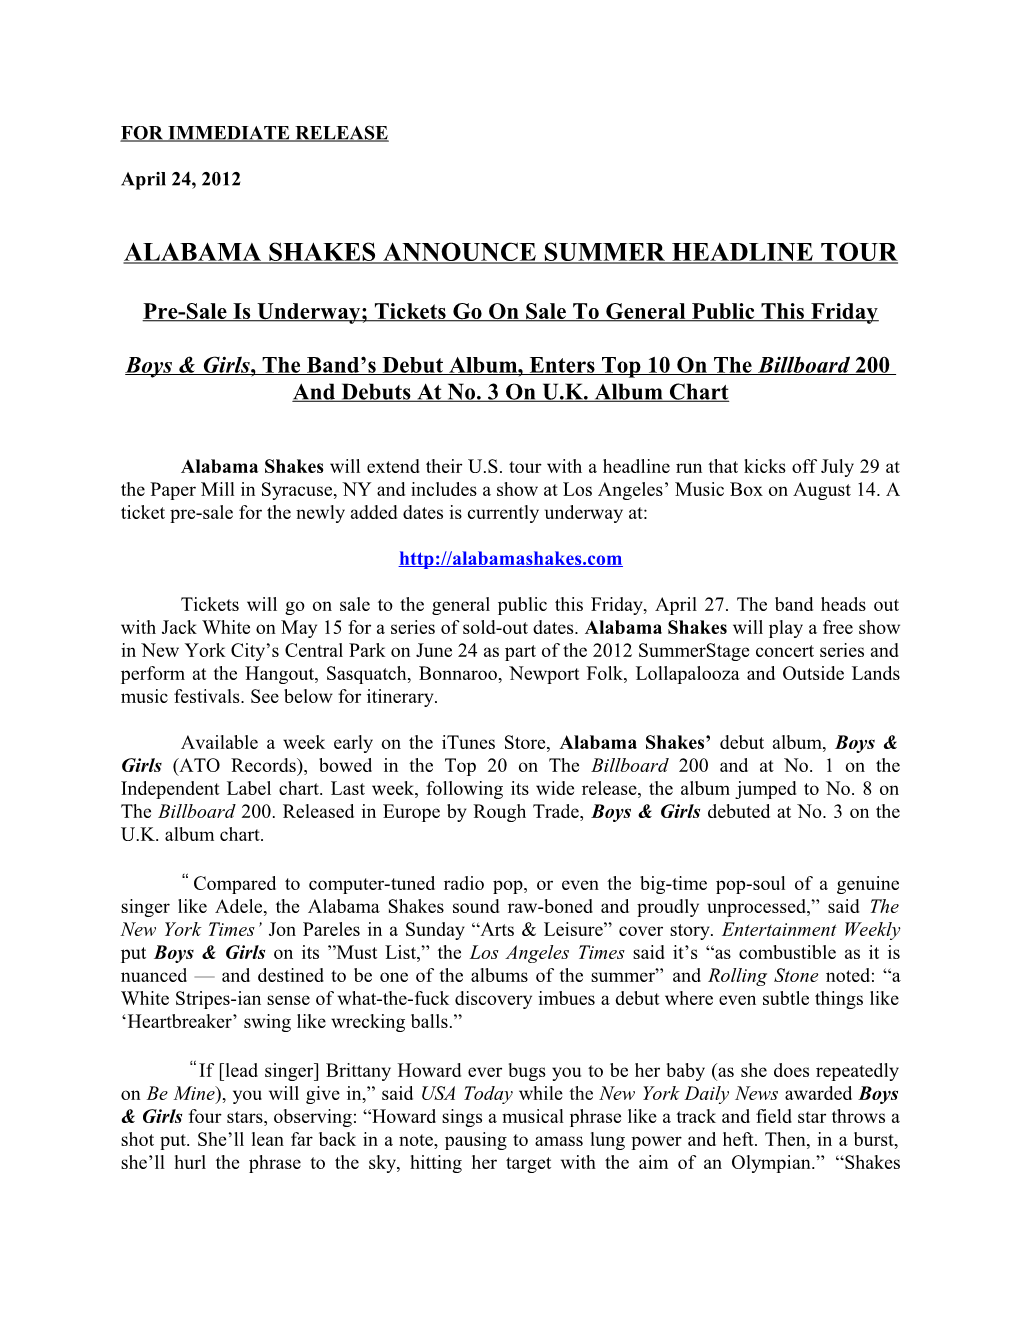 Alabama Shakes Announce Summer Headline Tour